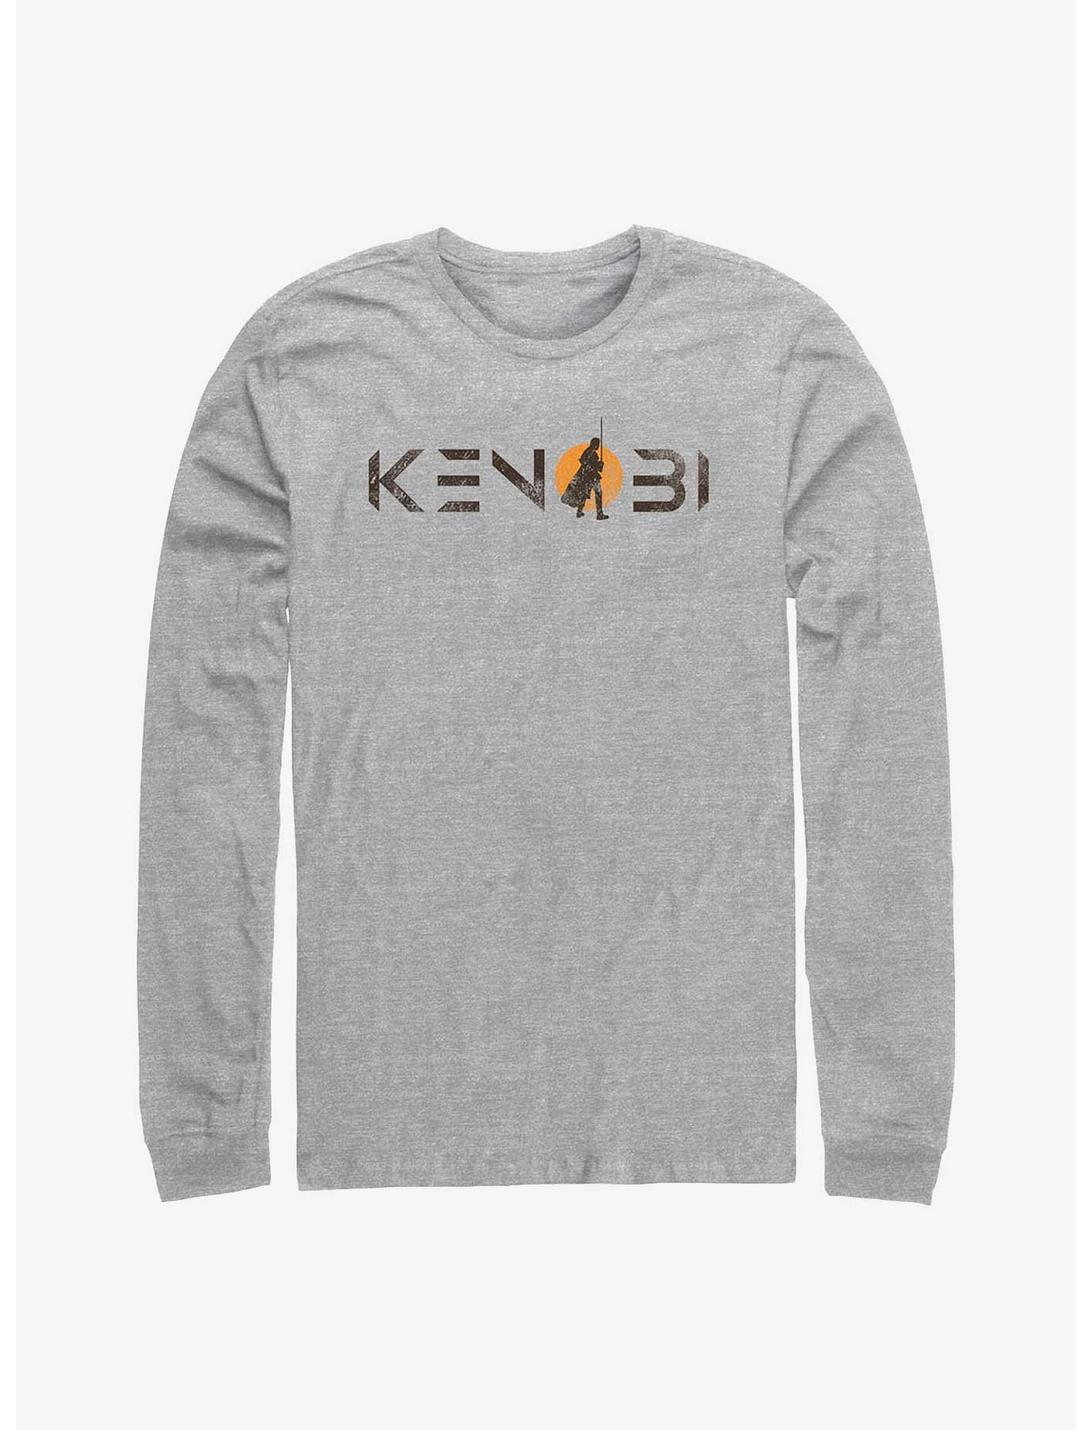 Star Wars Obi-Wan Kenobi Single Sun Logo Long-SLeeve T-Shirt, ATH HTR, hi-res